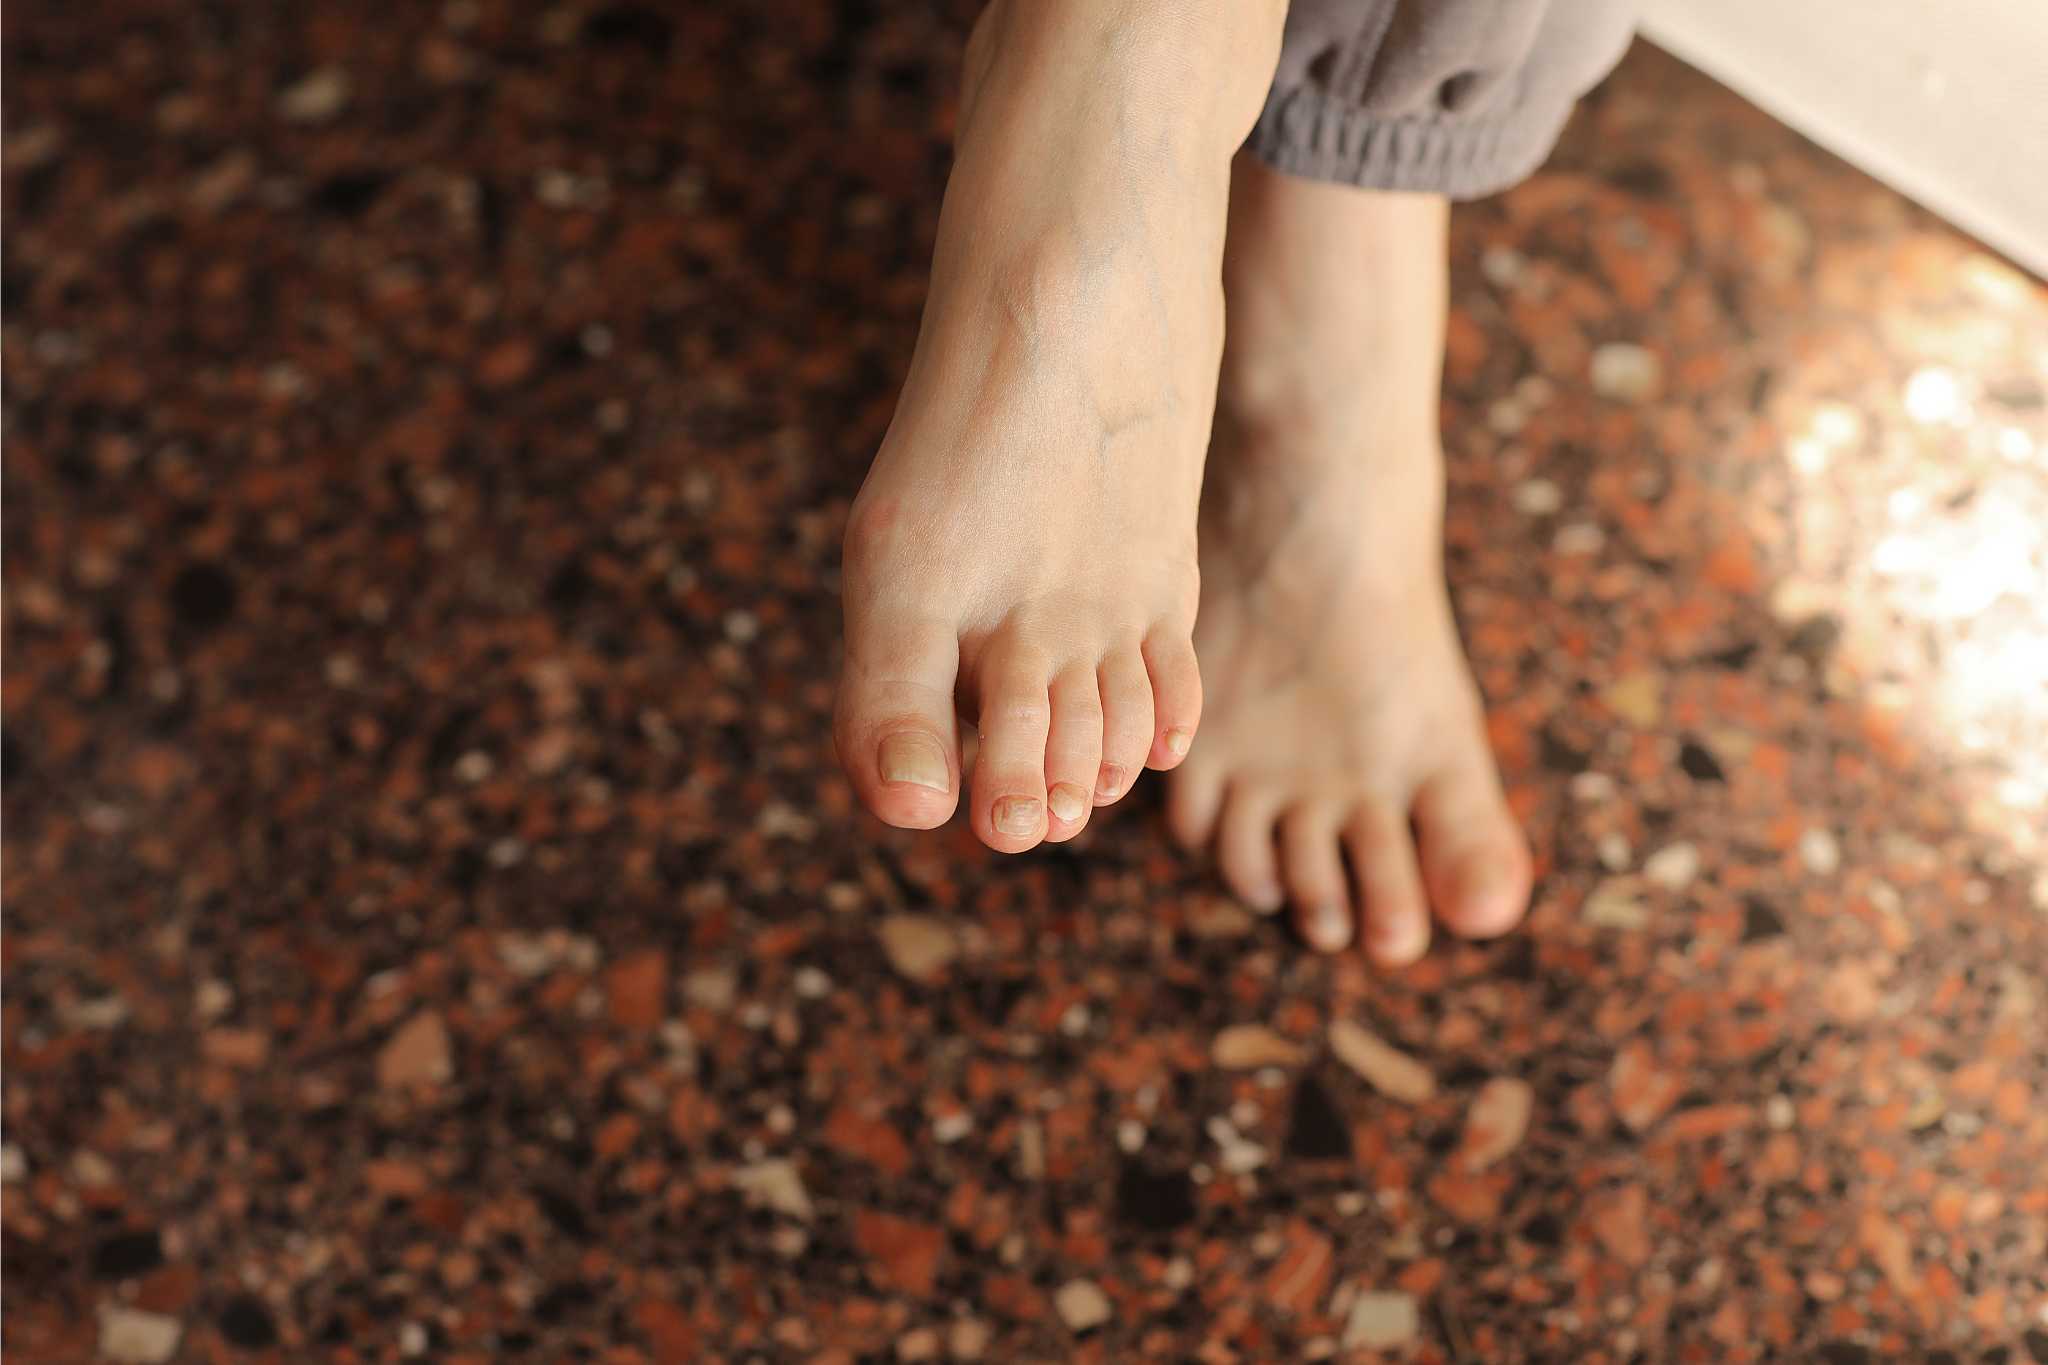 crossed leg with ingrown toenail